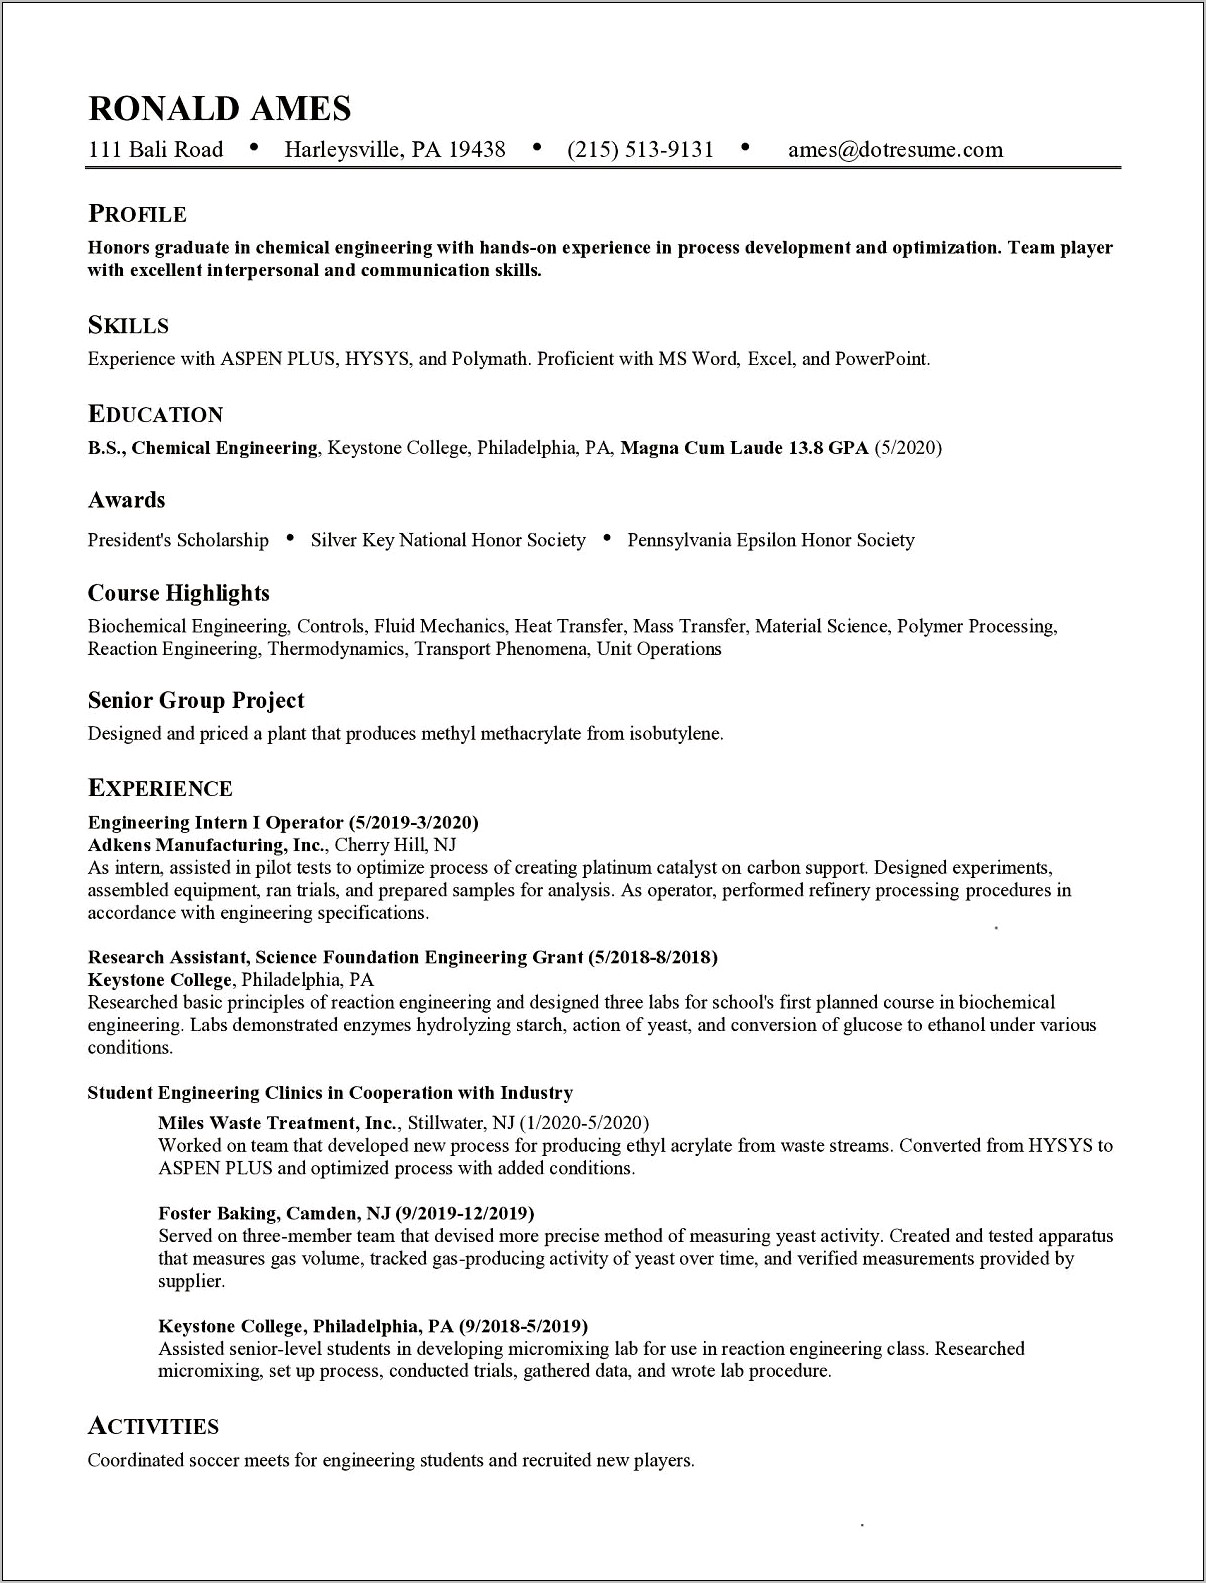 Resume For Engineering Internship Objective